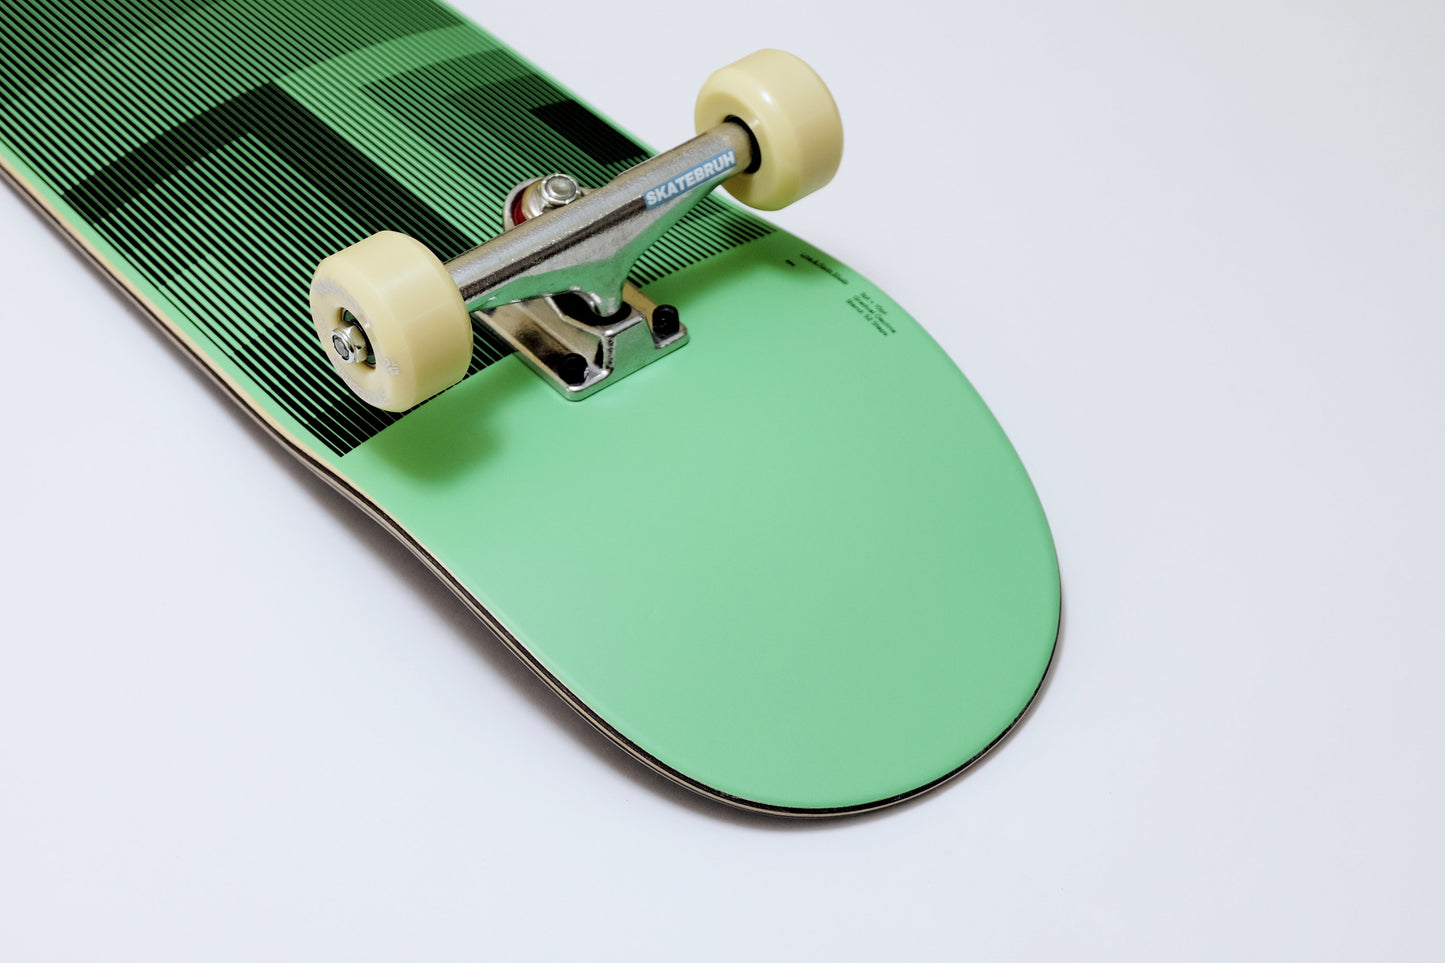 Globe G1 Lineform Mint skateboard - SkatebruhSG